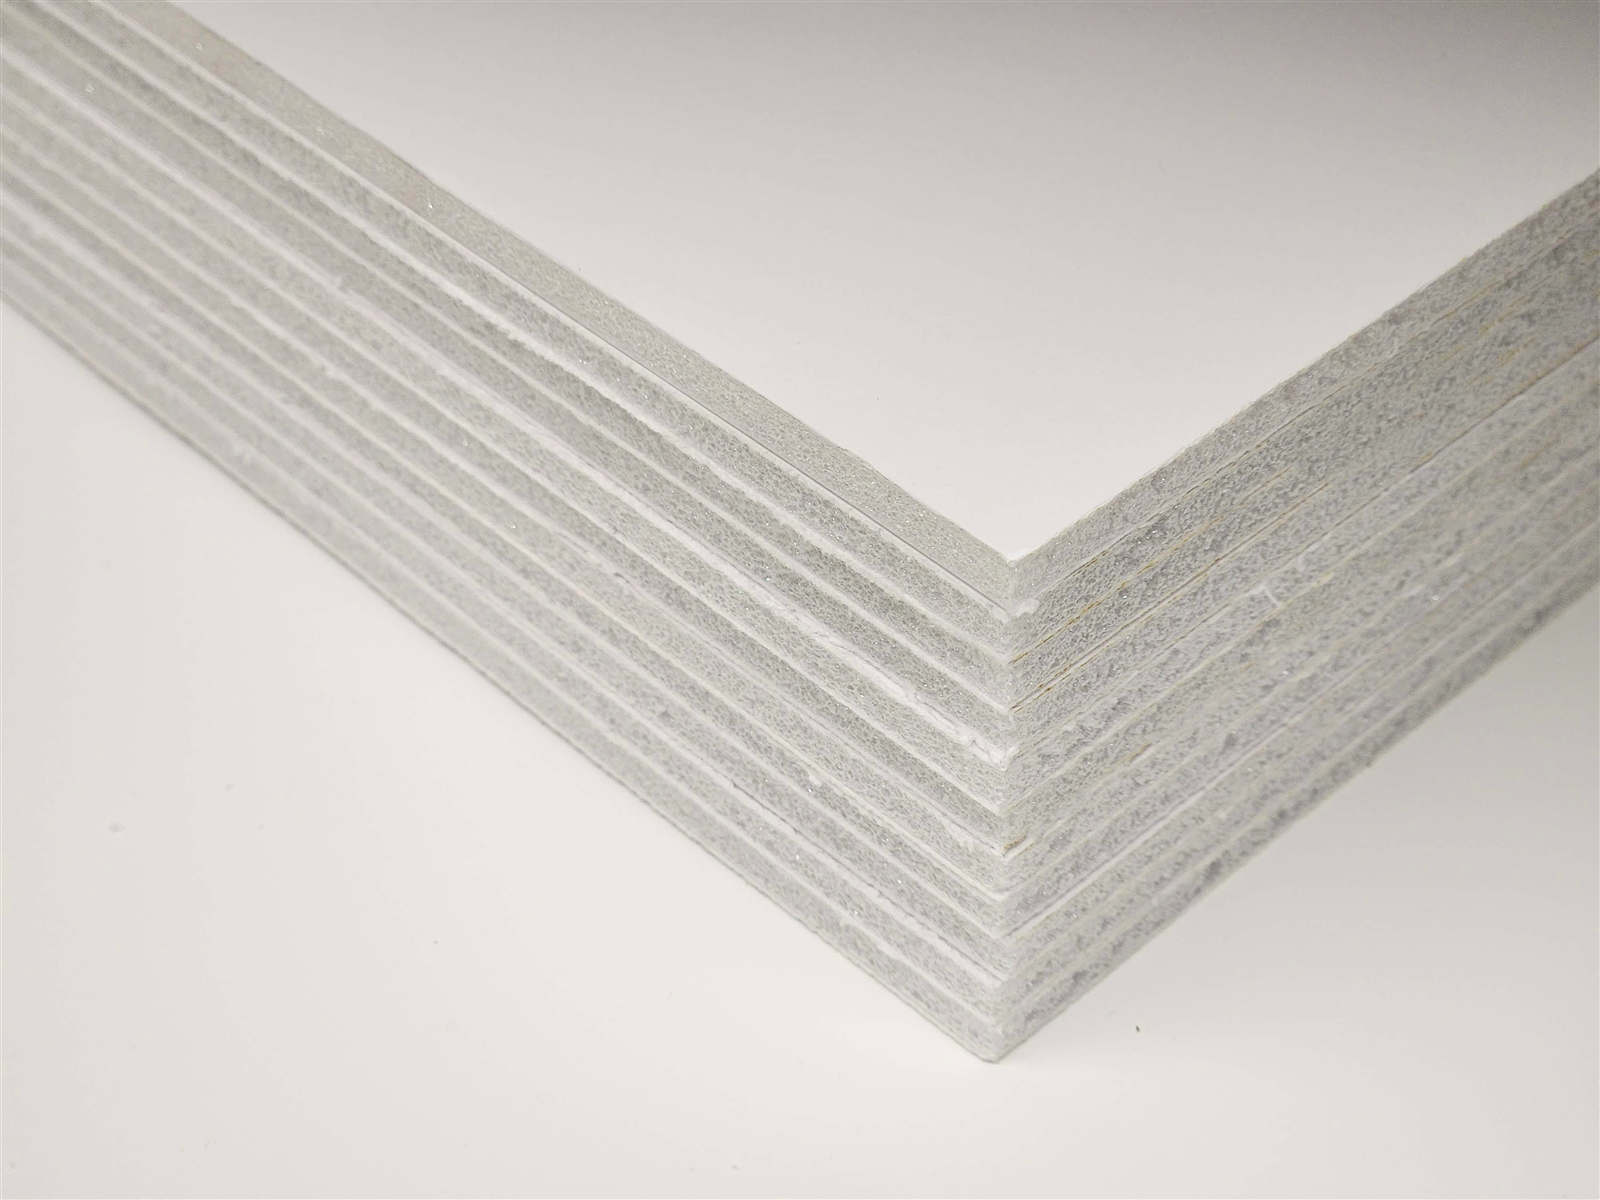 Whole PVC Foam Board - Black - 1/4 inch thick